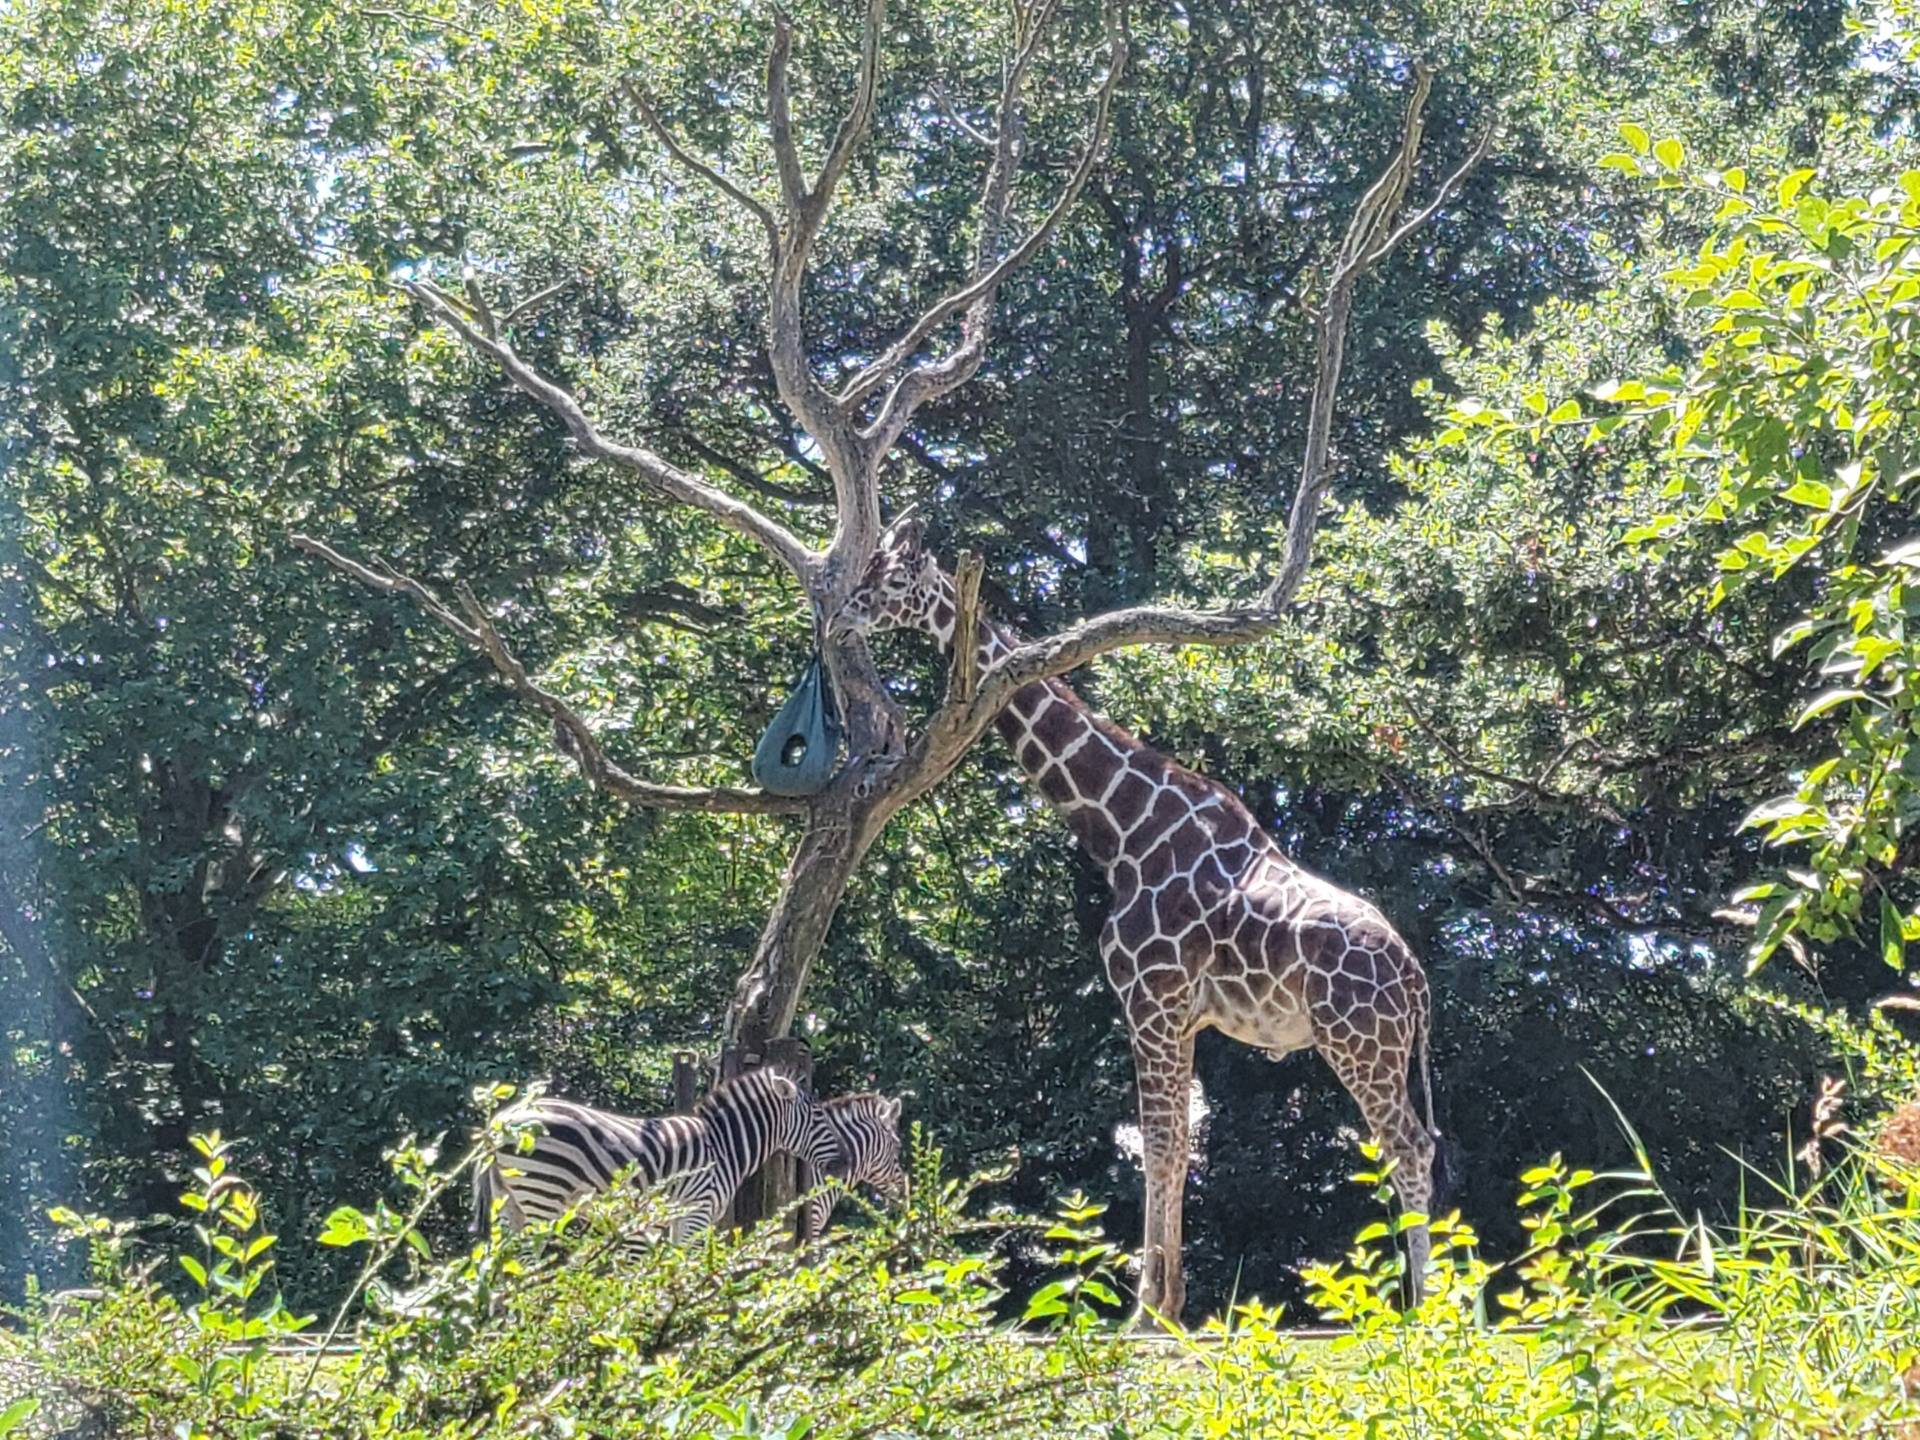 The zebras and a giraffe enjoying the day.